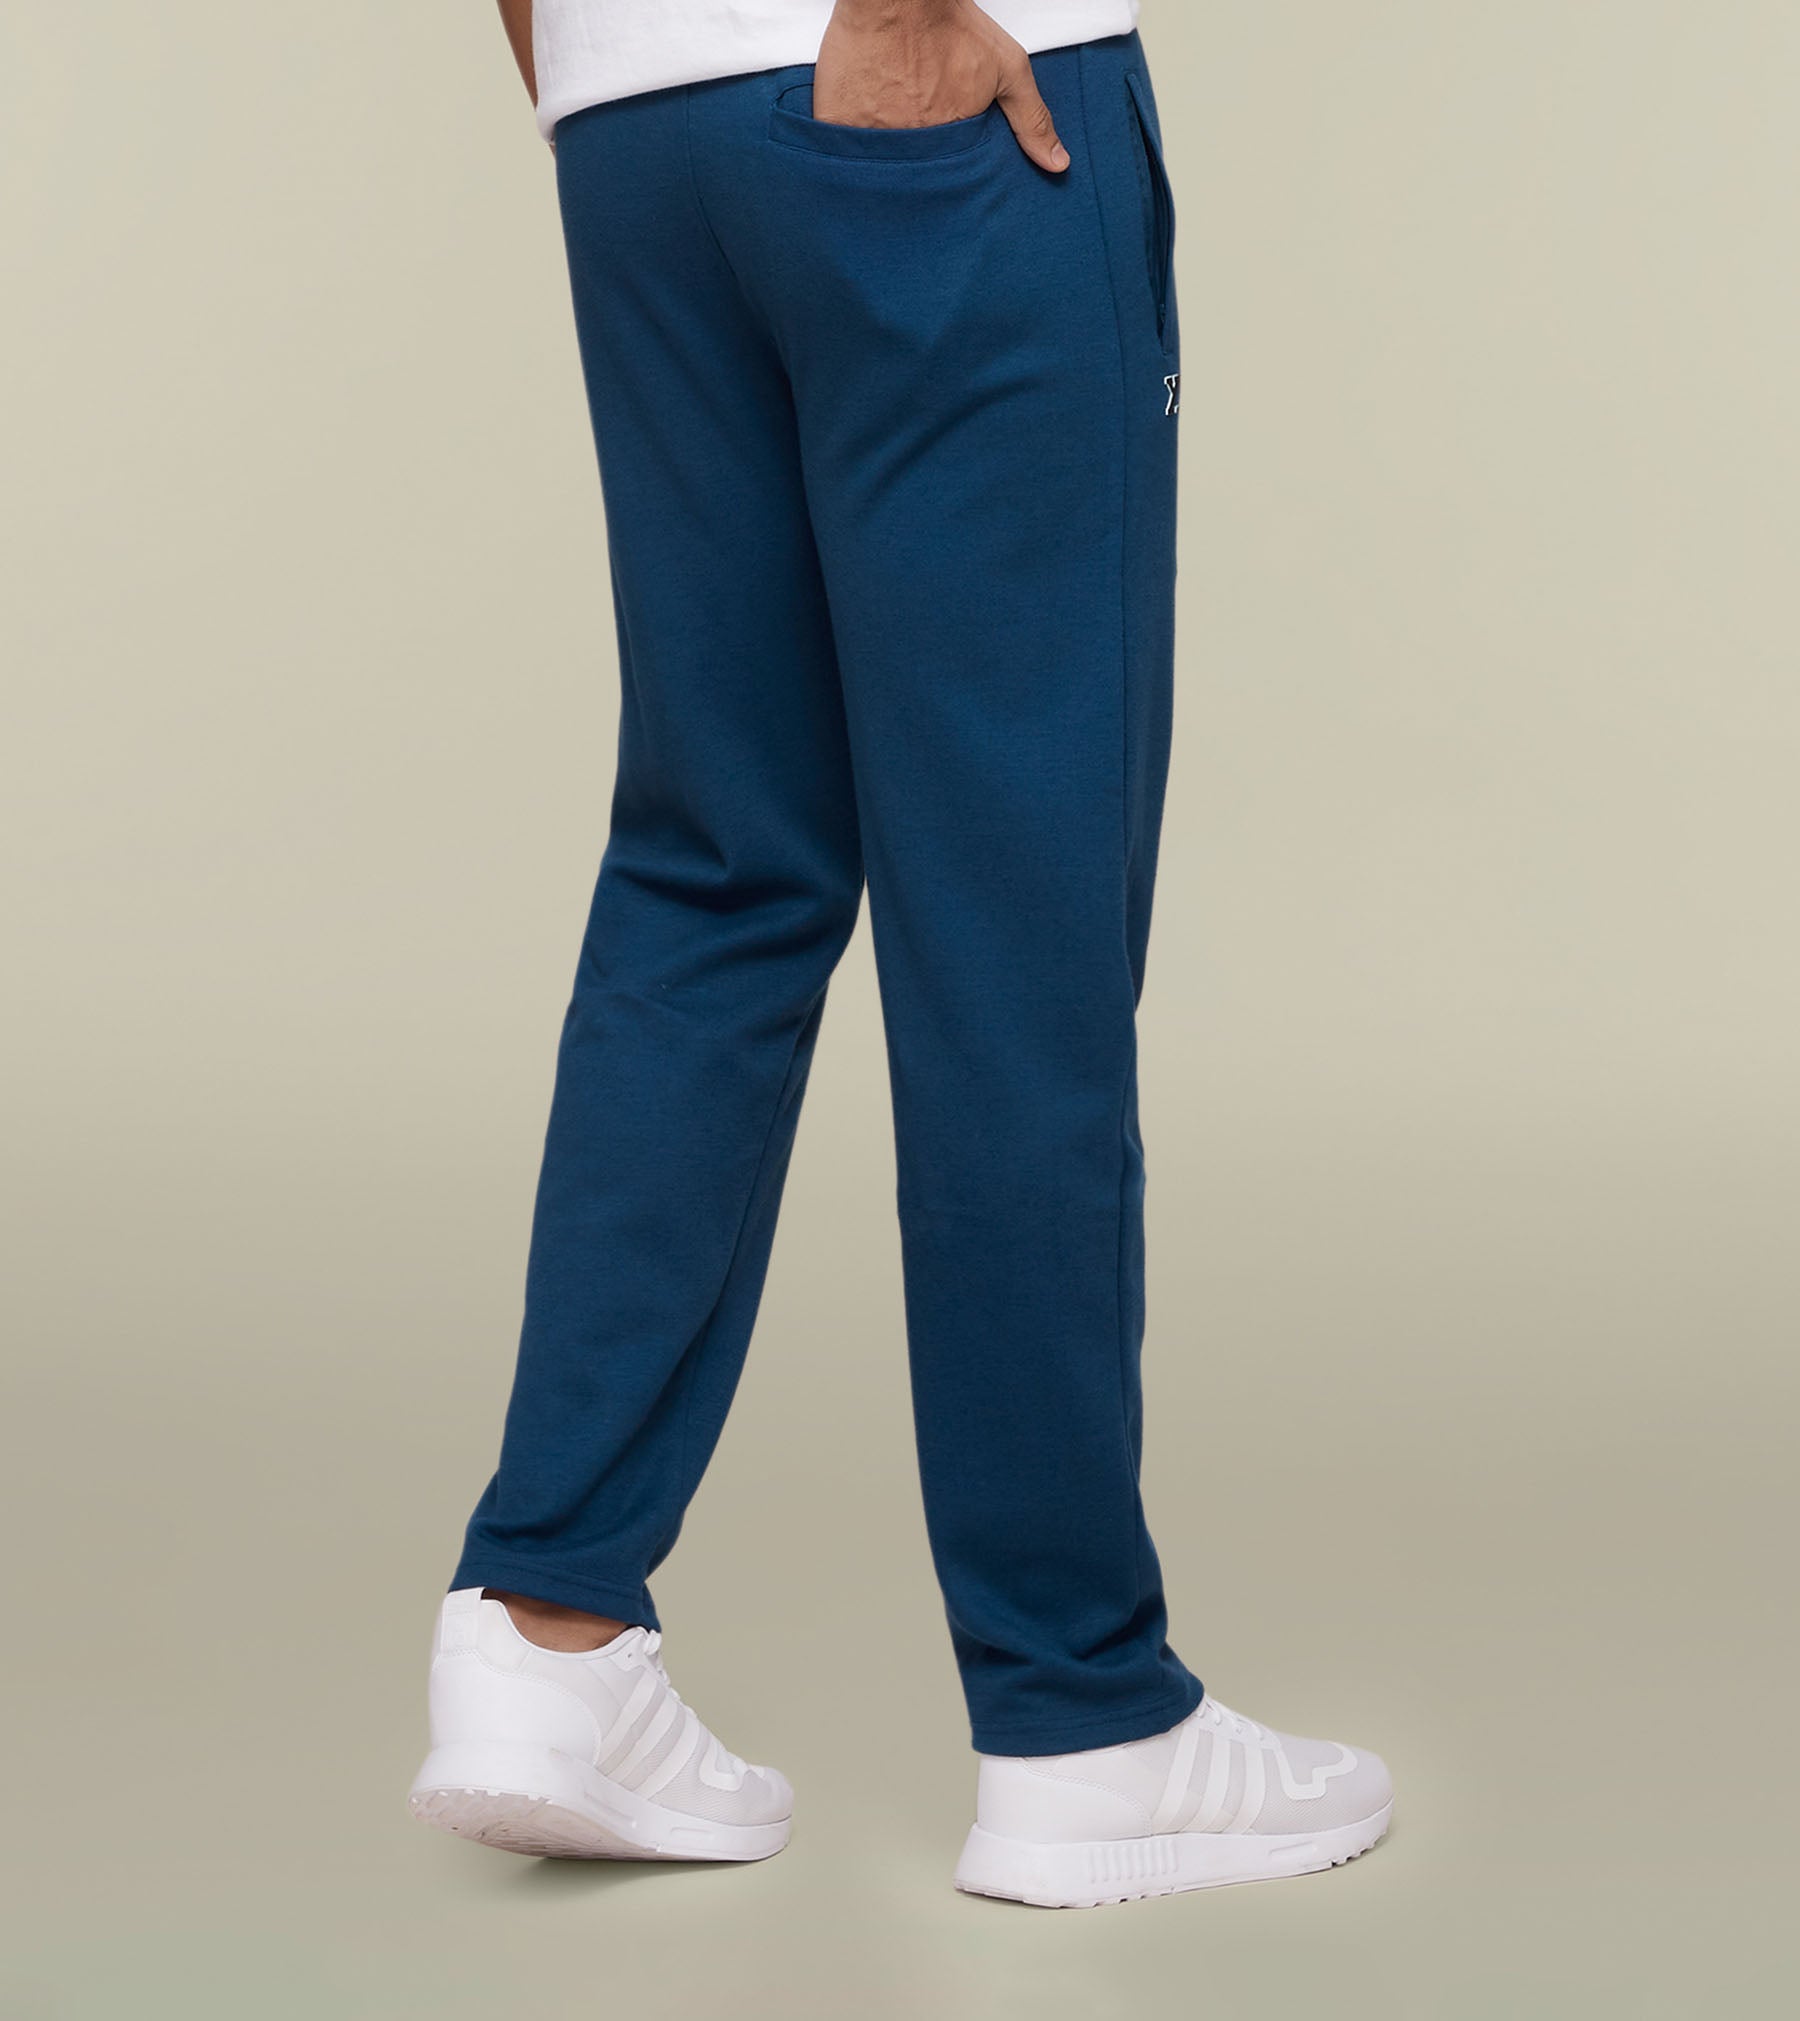 Skilcraft Men's Nylon Regular Fit Jwod Air Force Blue Track Pants Size XL |  Pants, Air force blue, Track pants